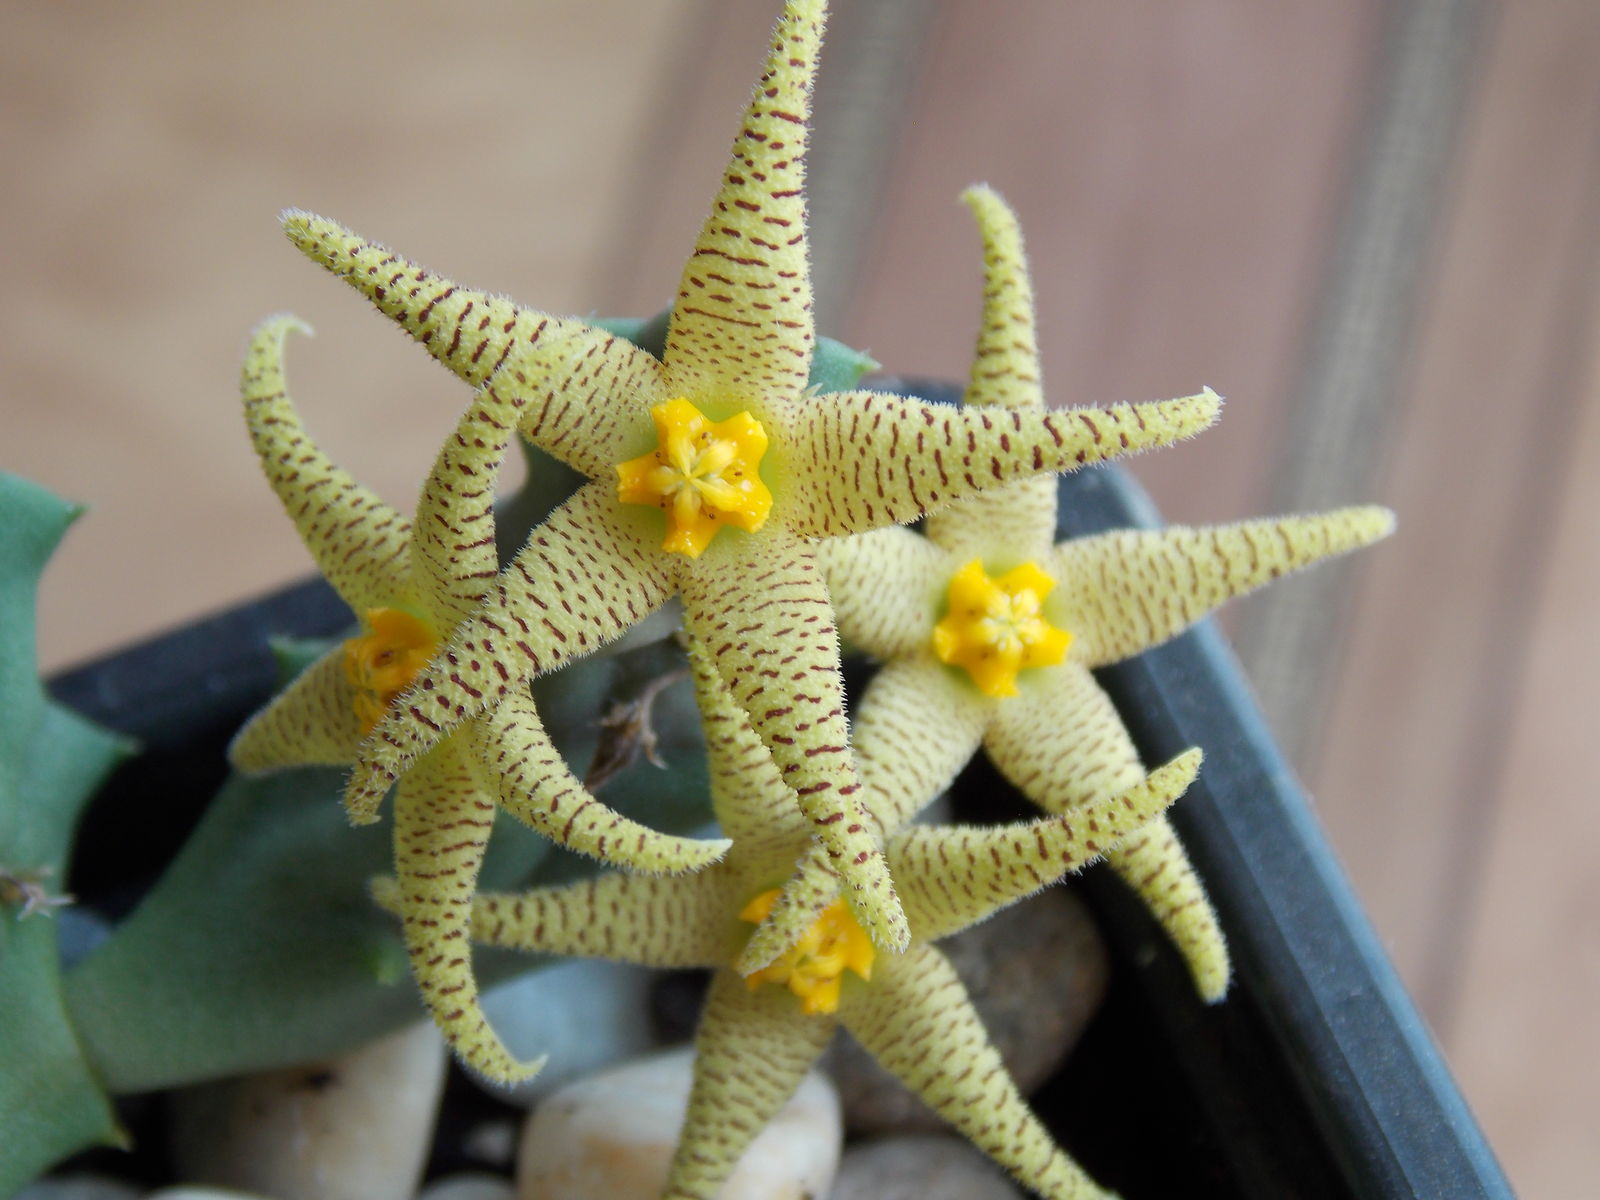 Piaranthus R.Br Asclepiadaceae succulent Flowering Plants 1head High 2-3cm 